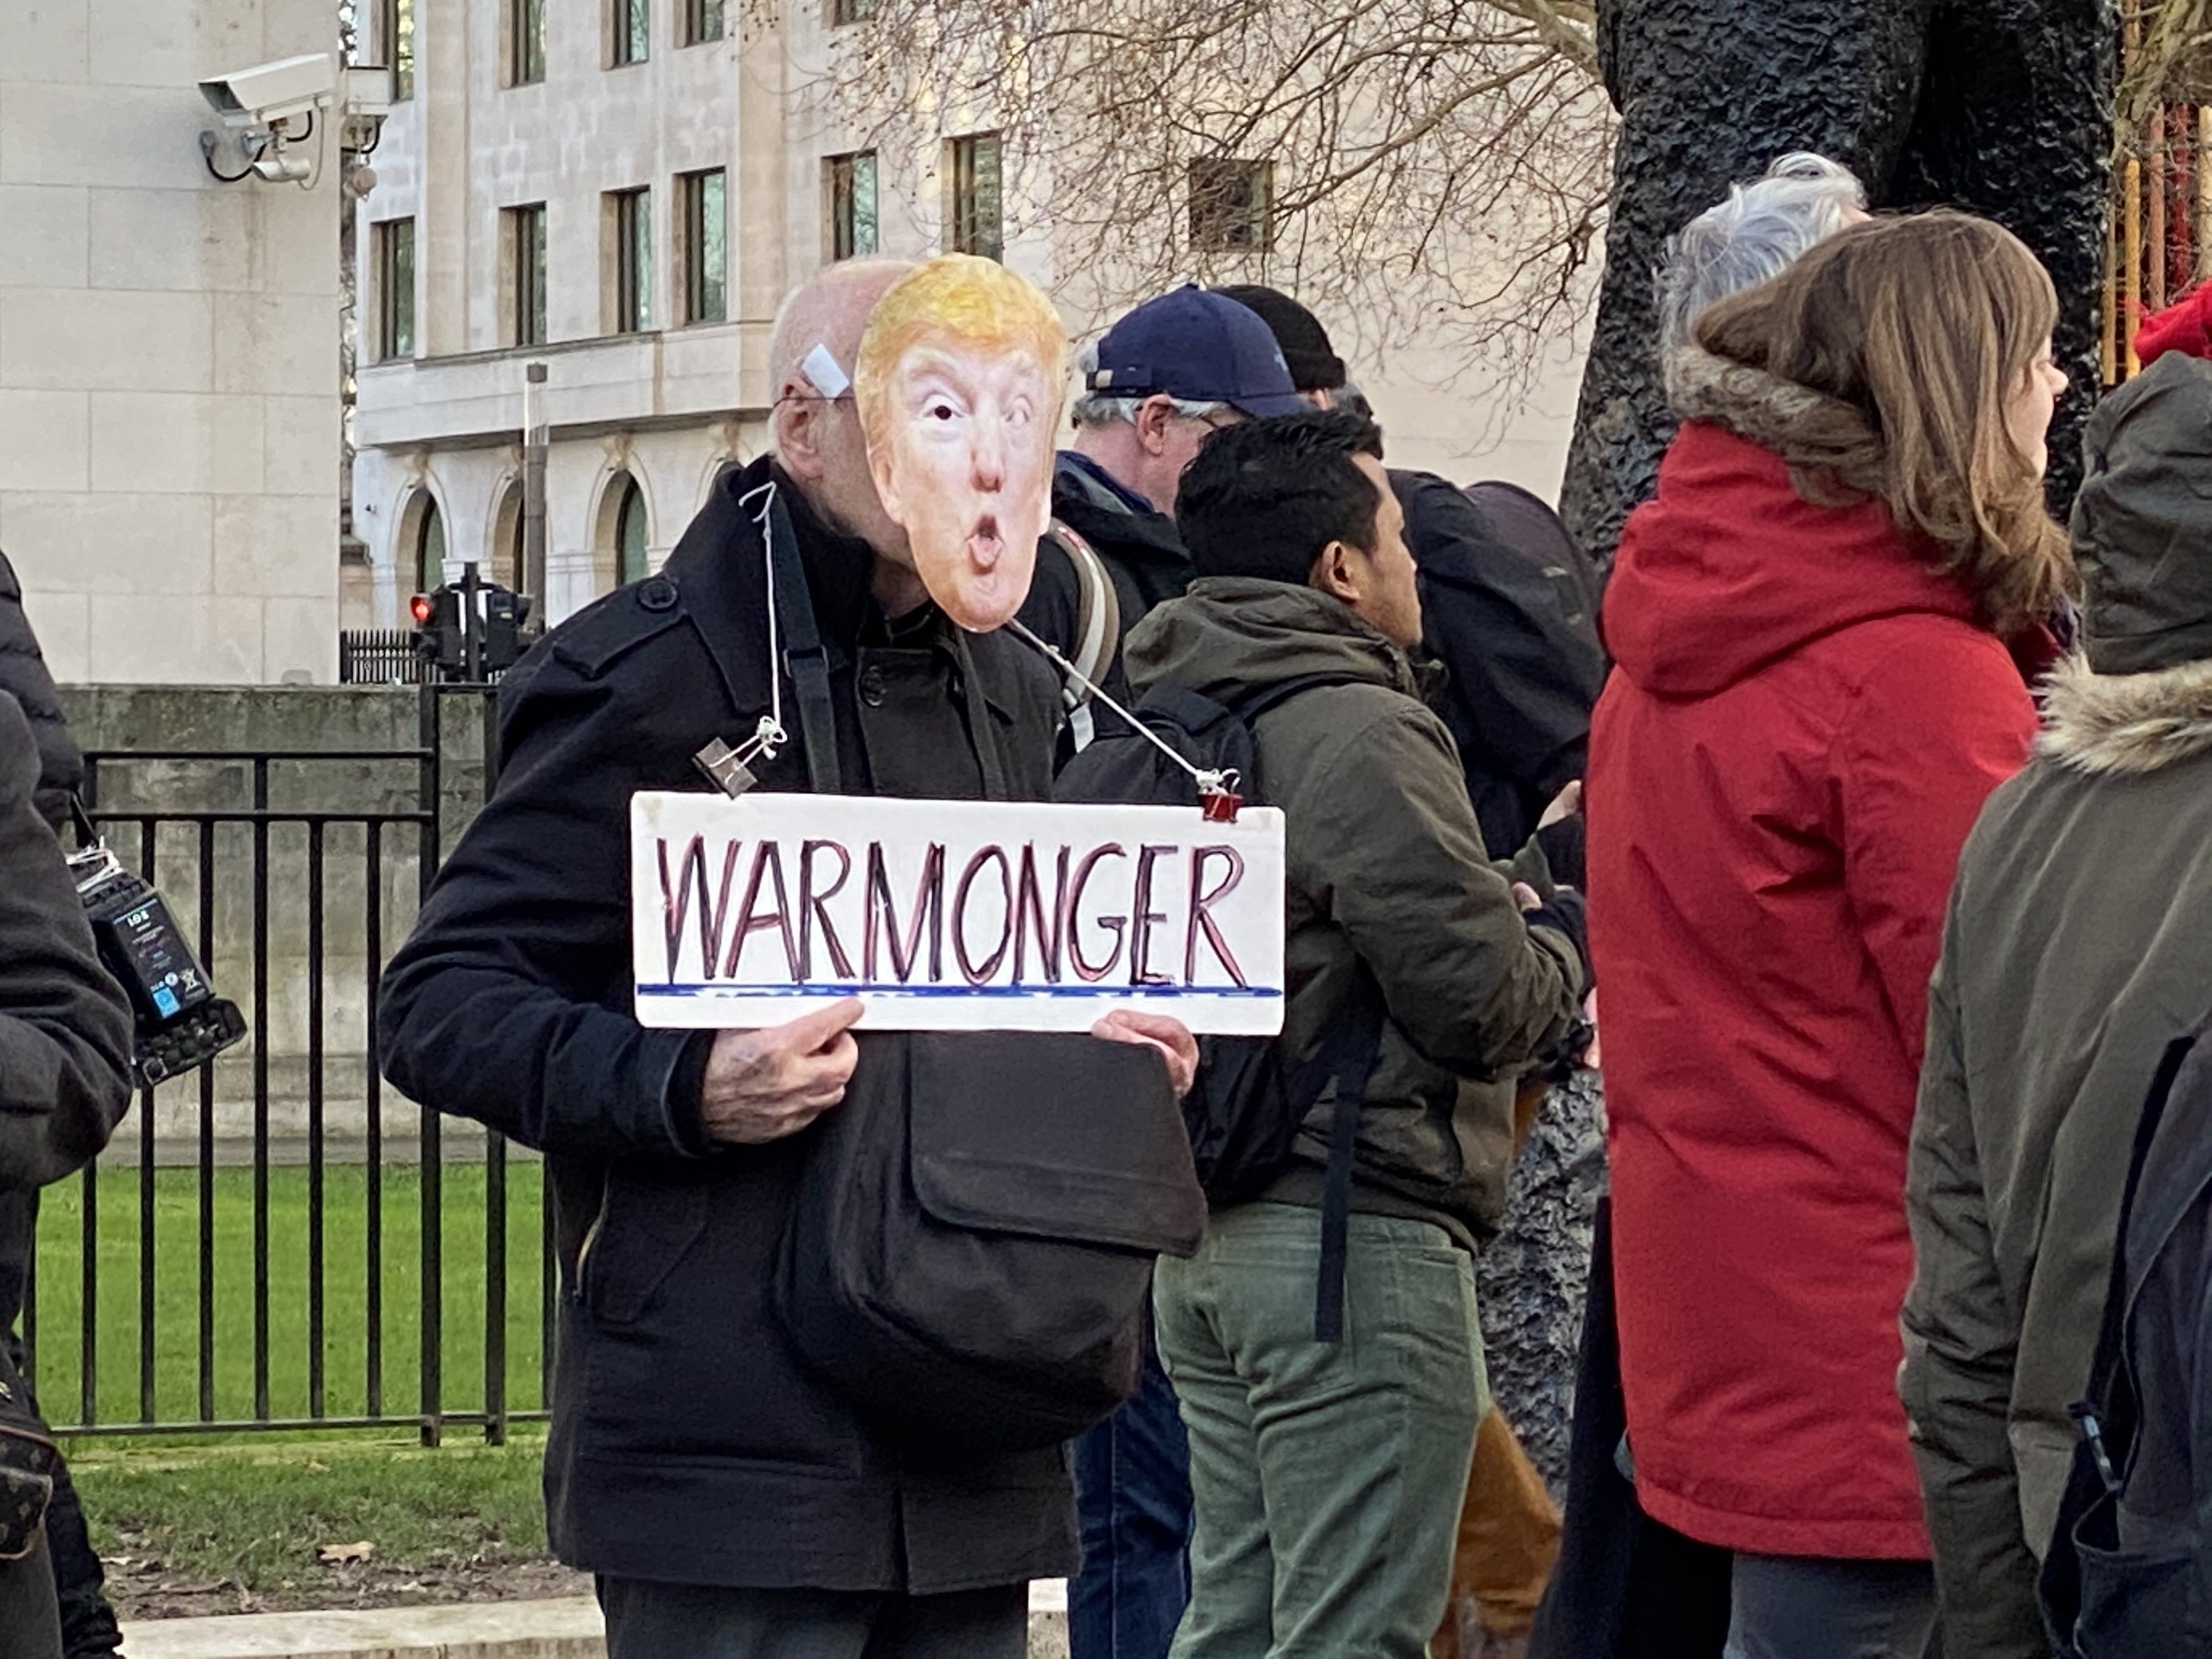 An anti-war rally fon January 04, 2020 at Downing Street in London